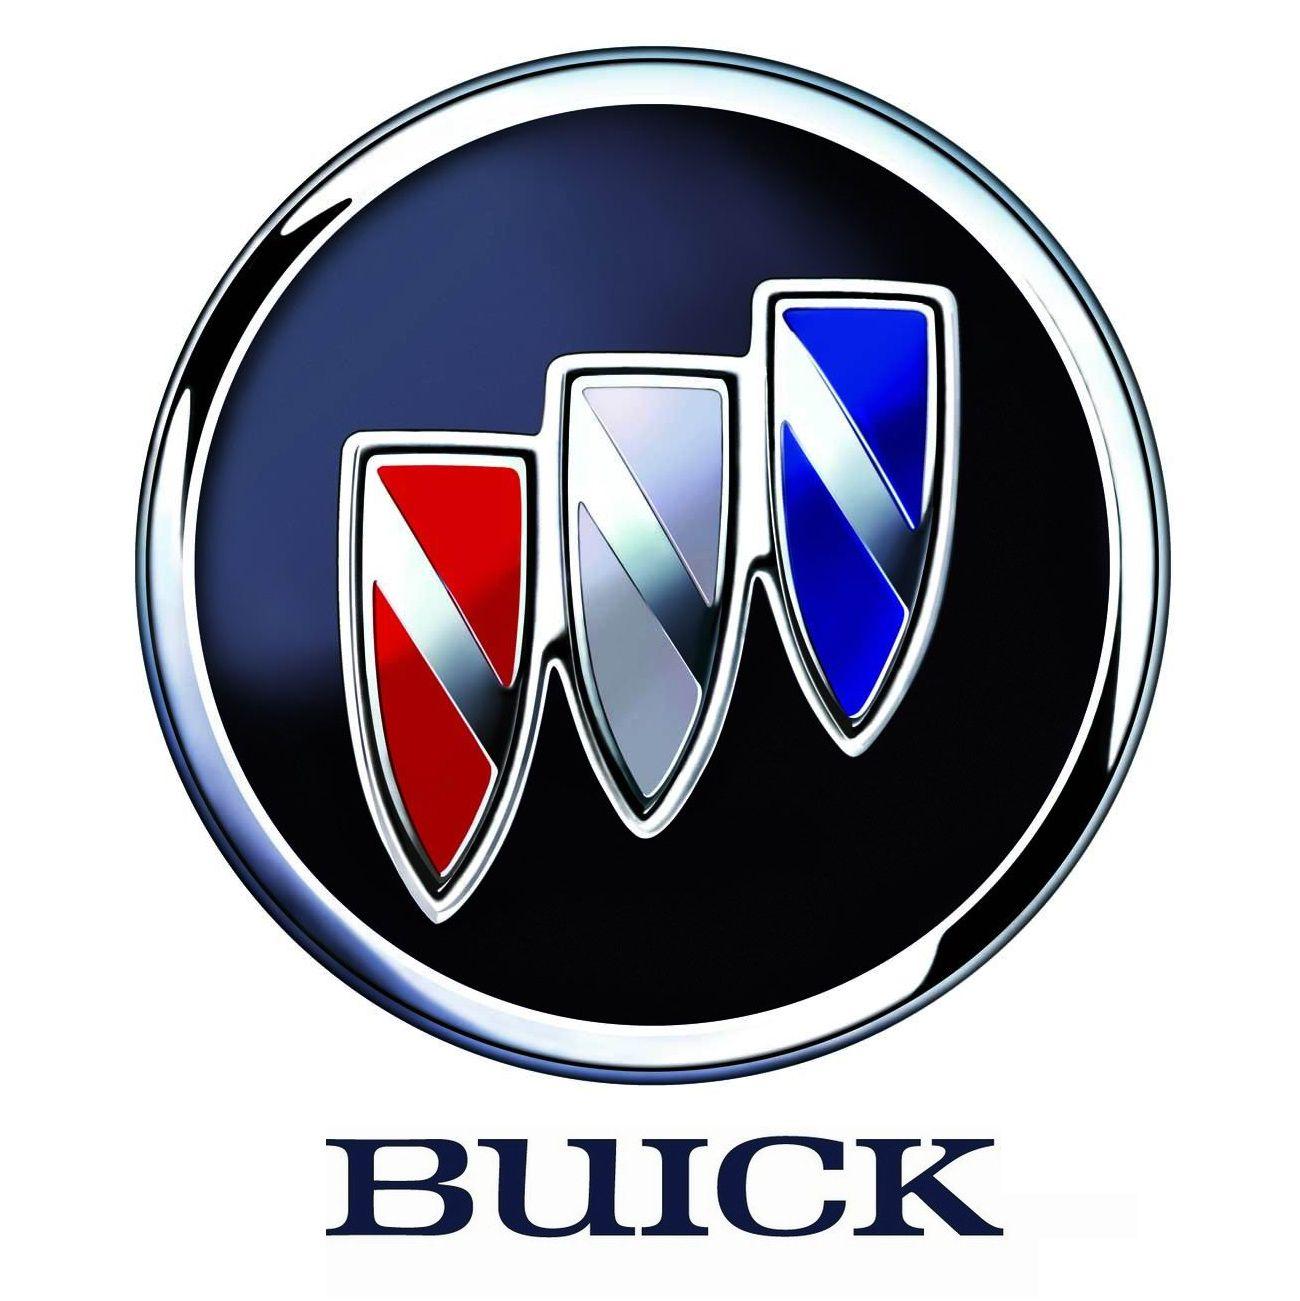 Three Shield Car Logo - Buick Logo, Buick Car Symbol Meaning and History | Car Brand Names.com